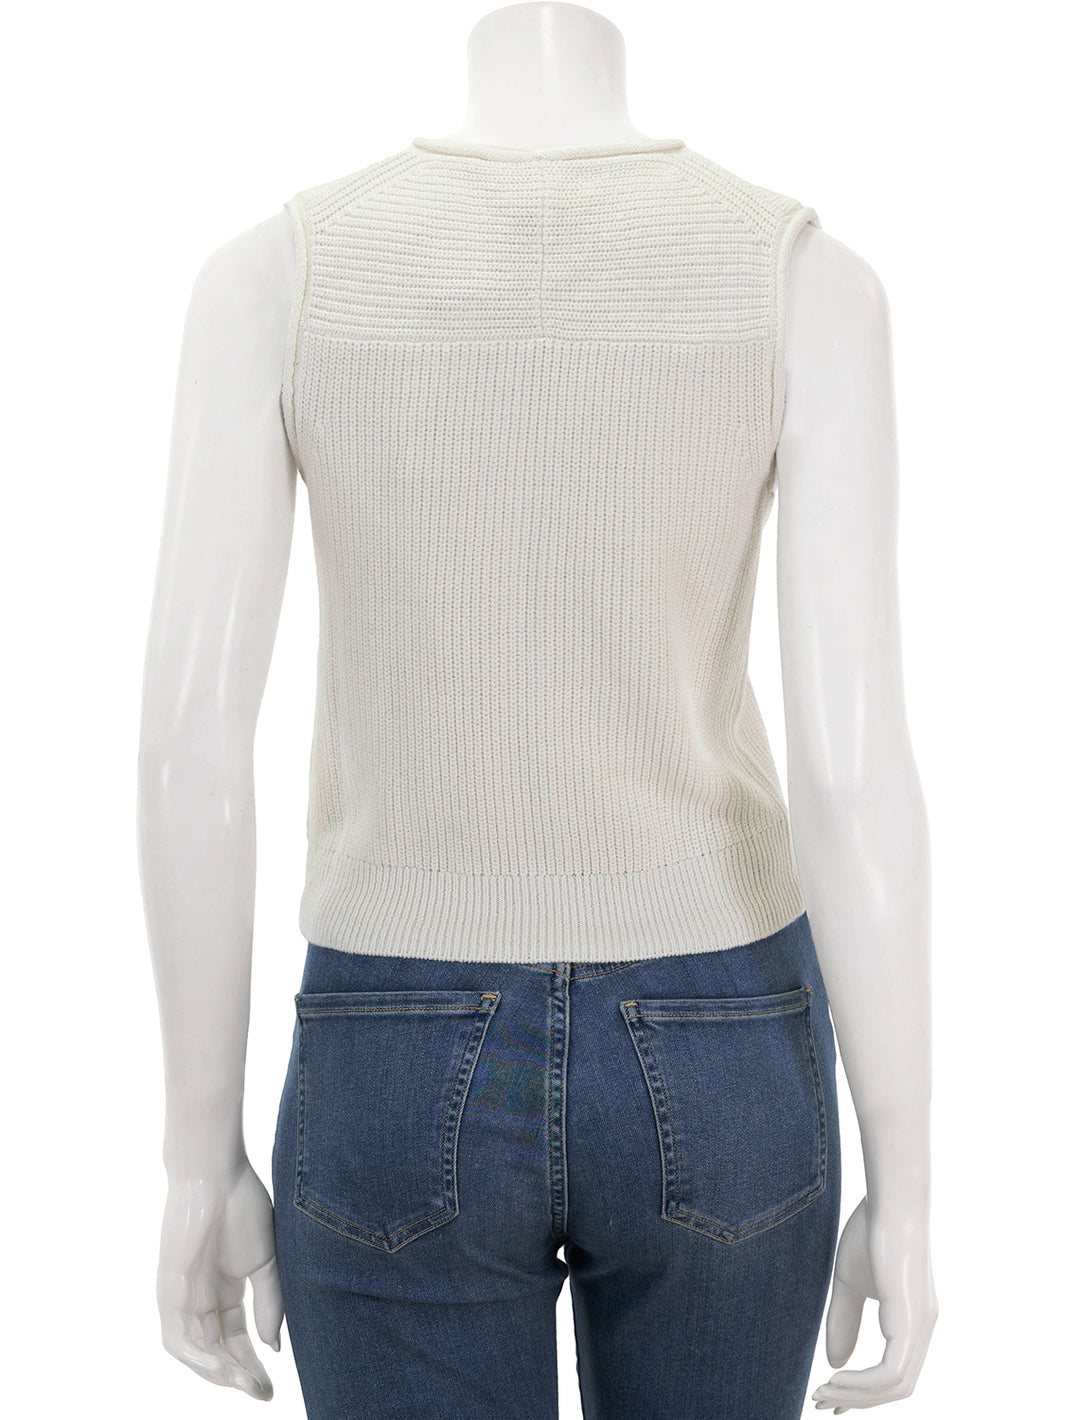 back view of eldridge sweater vest in off-white